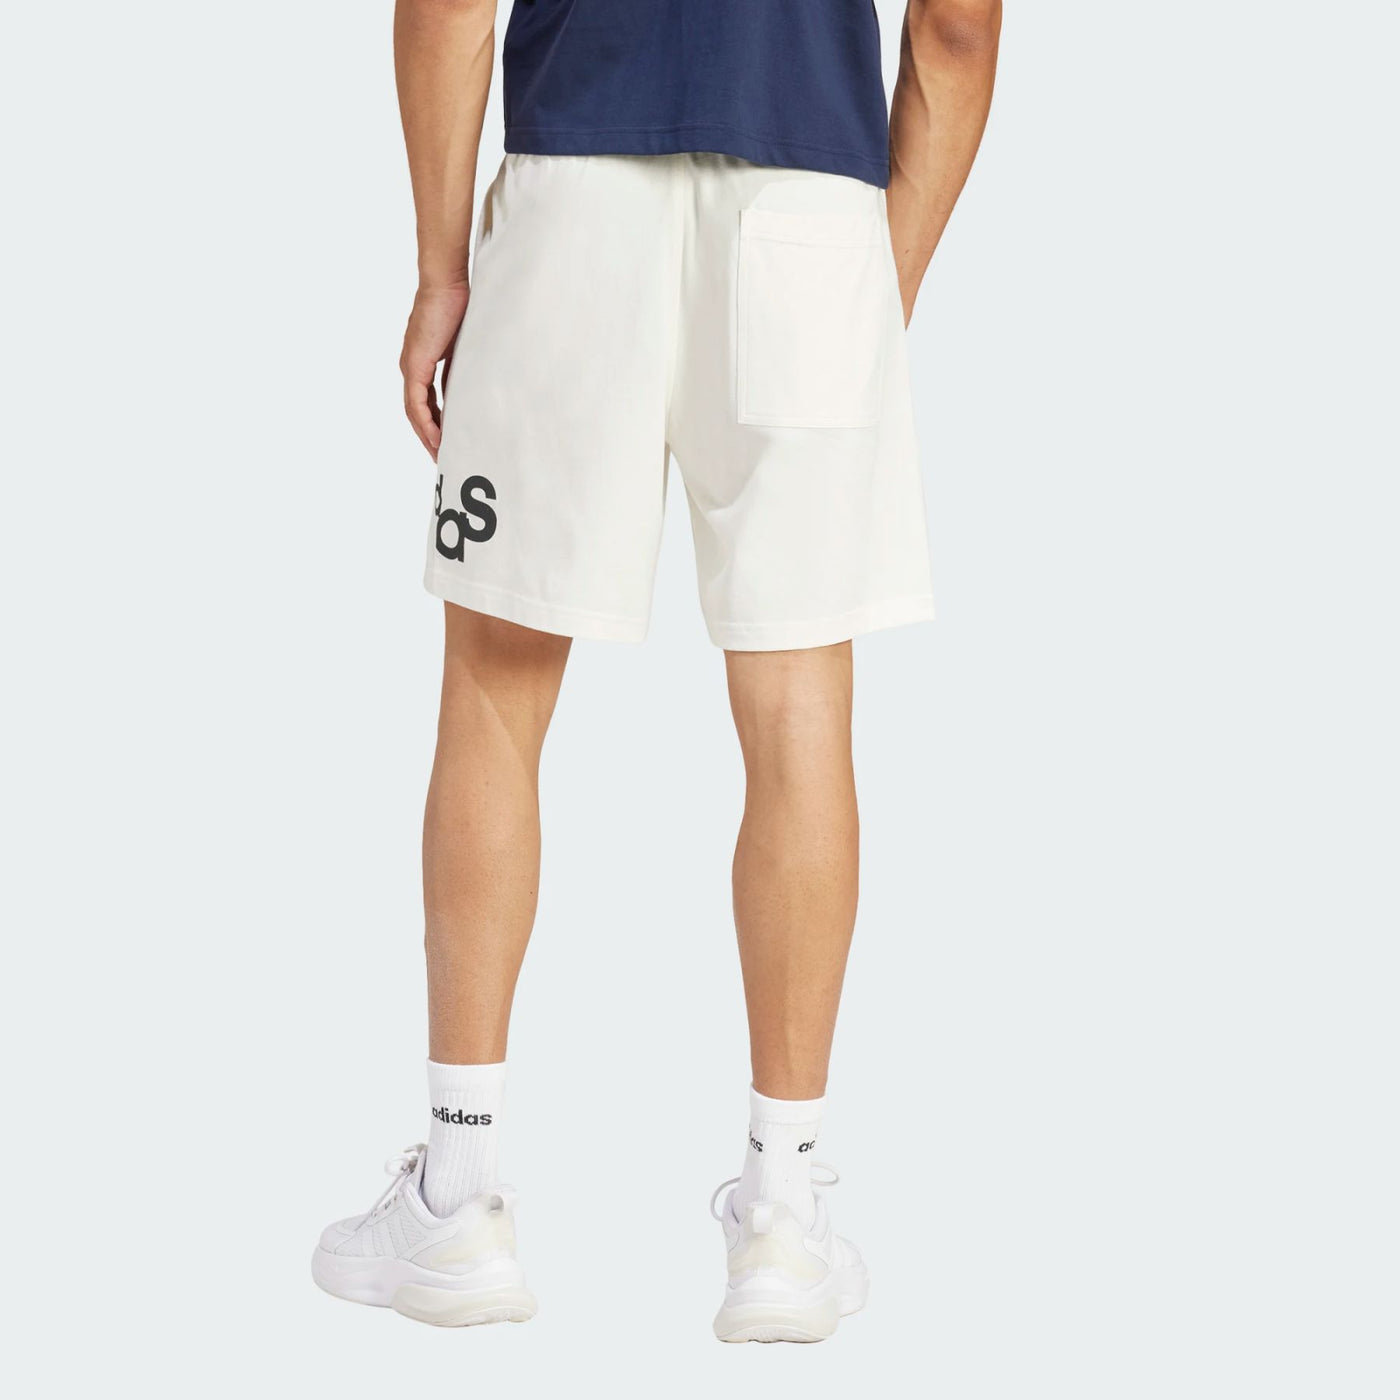 IS2000 - Shorts - Adidas